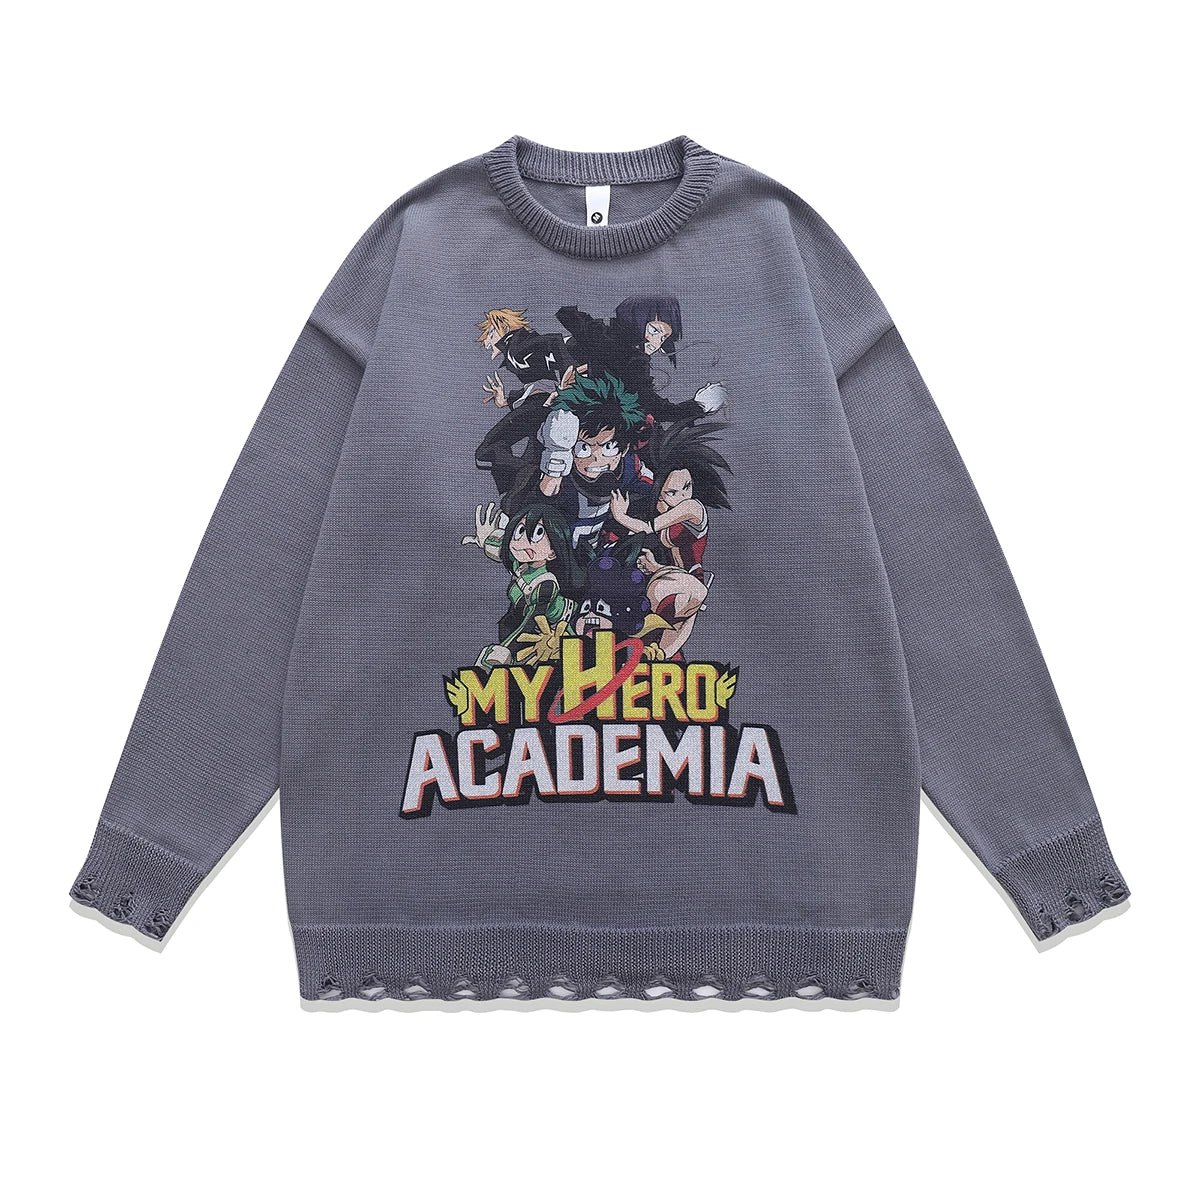 My Hero Academia Sweater Grey